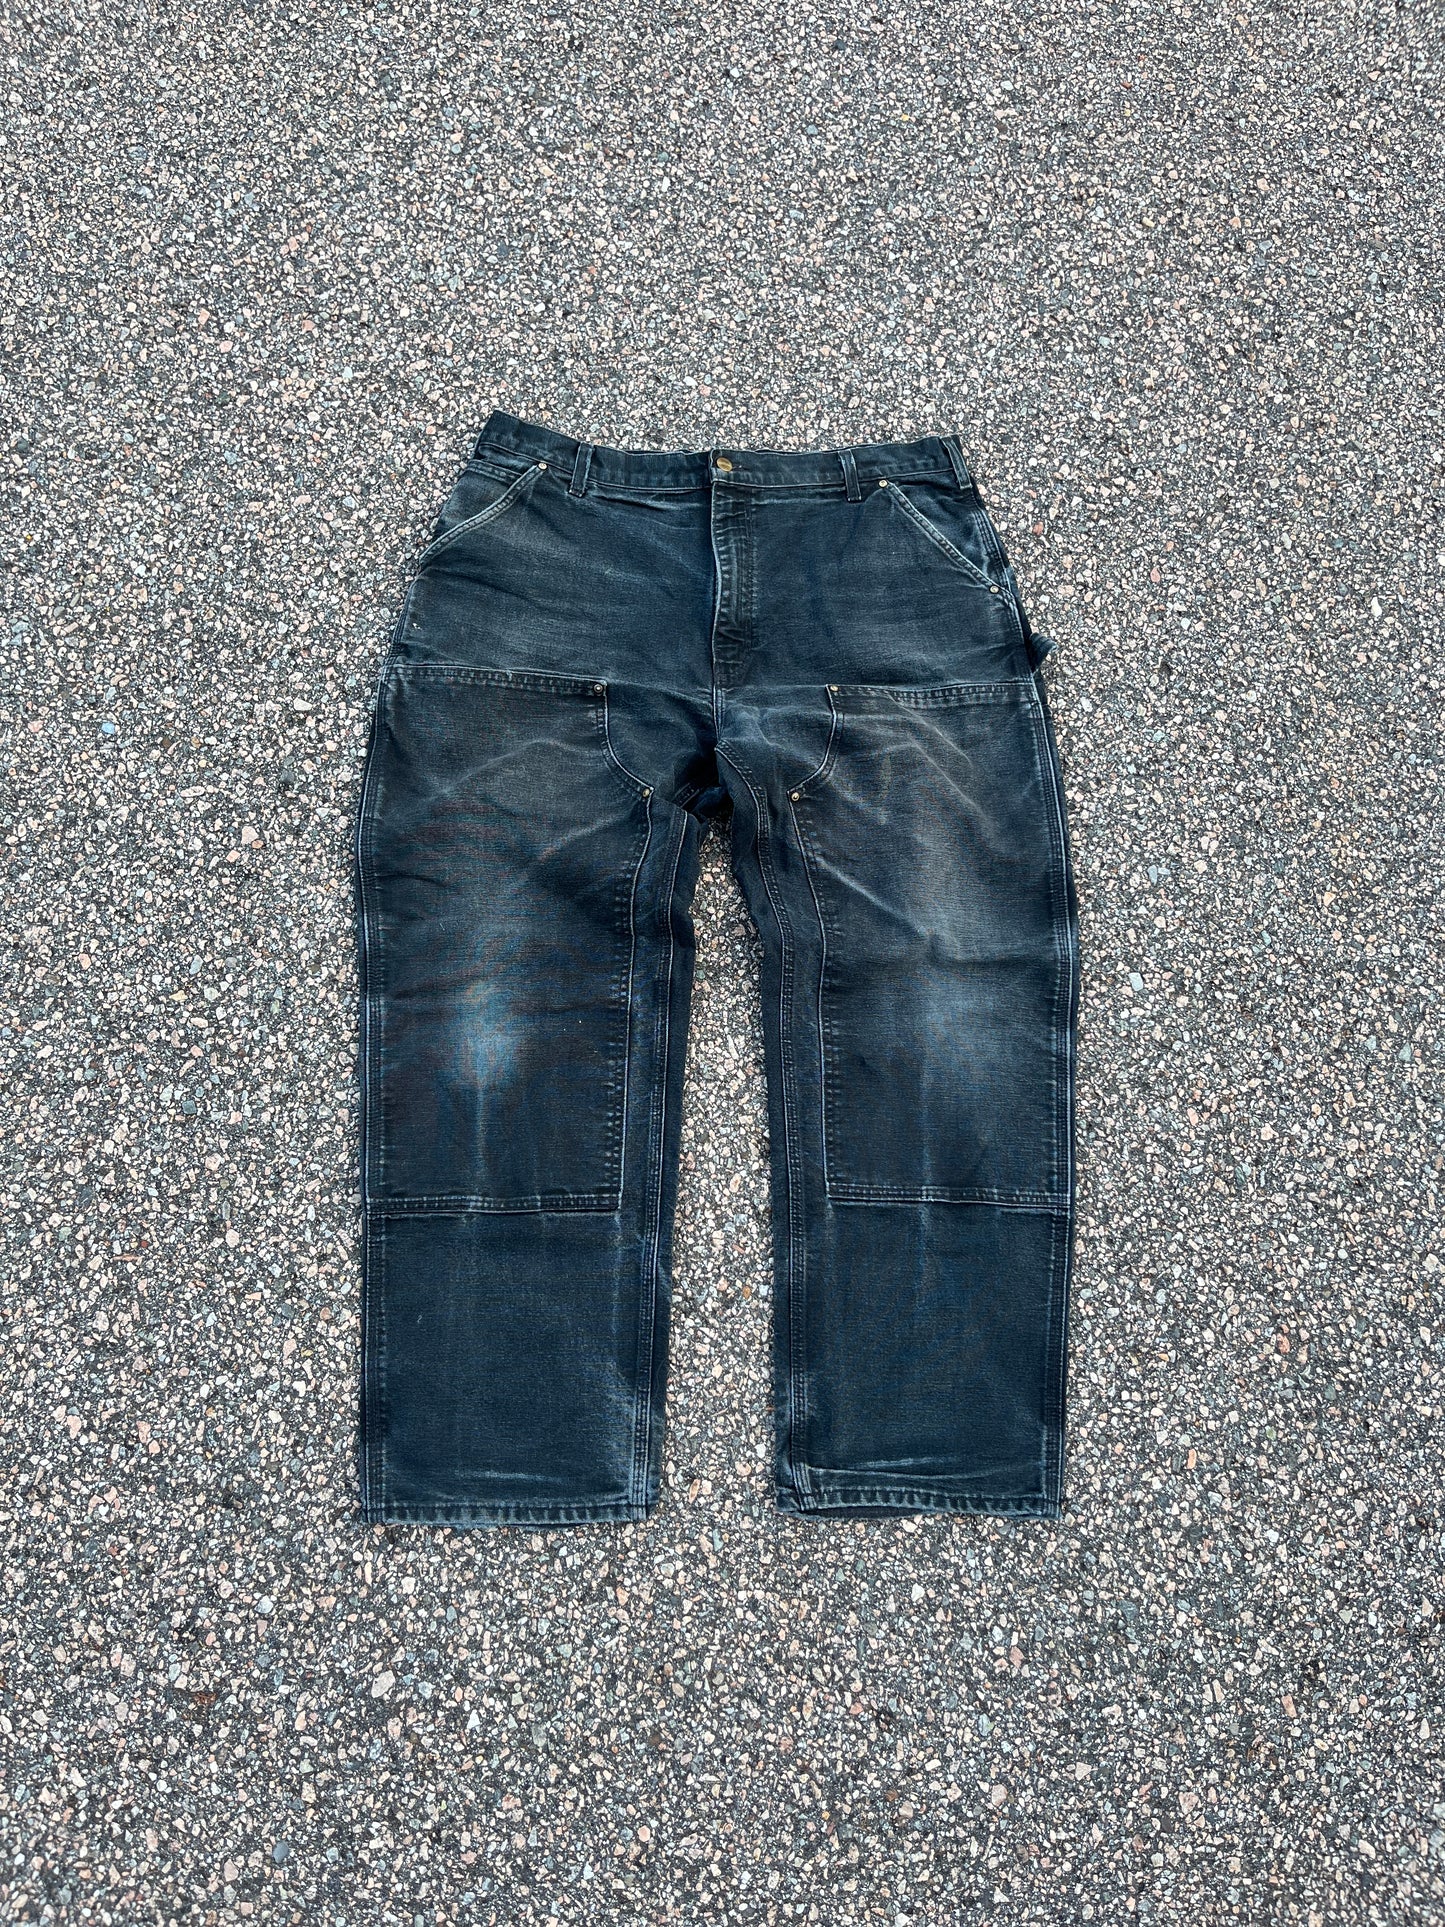 Faded Black Carhartt Double Knee Pants - 38 x 29.5